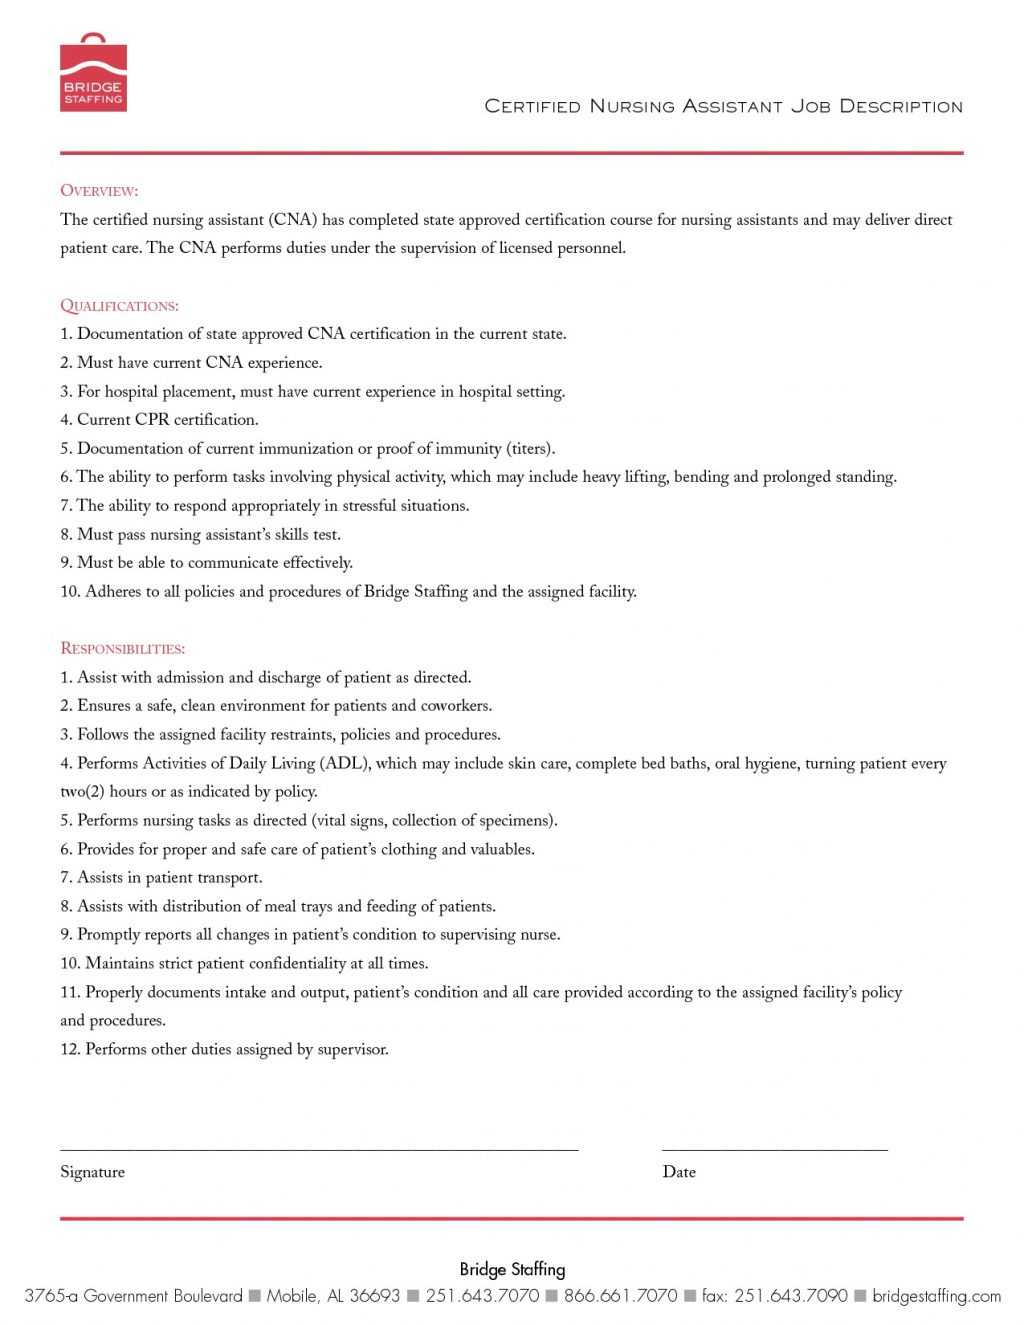 10 Handoff Report Templates For Nurses | Proposal Resume With Regard To Nursing Handoff Report Template